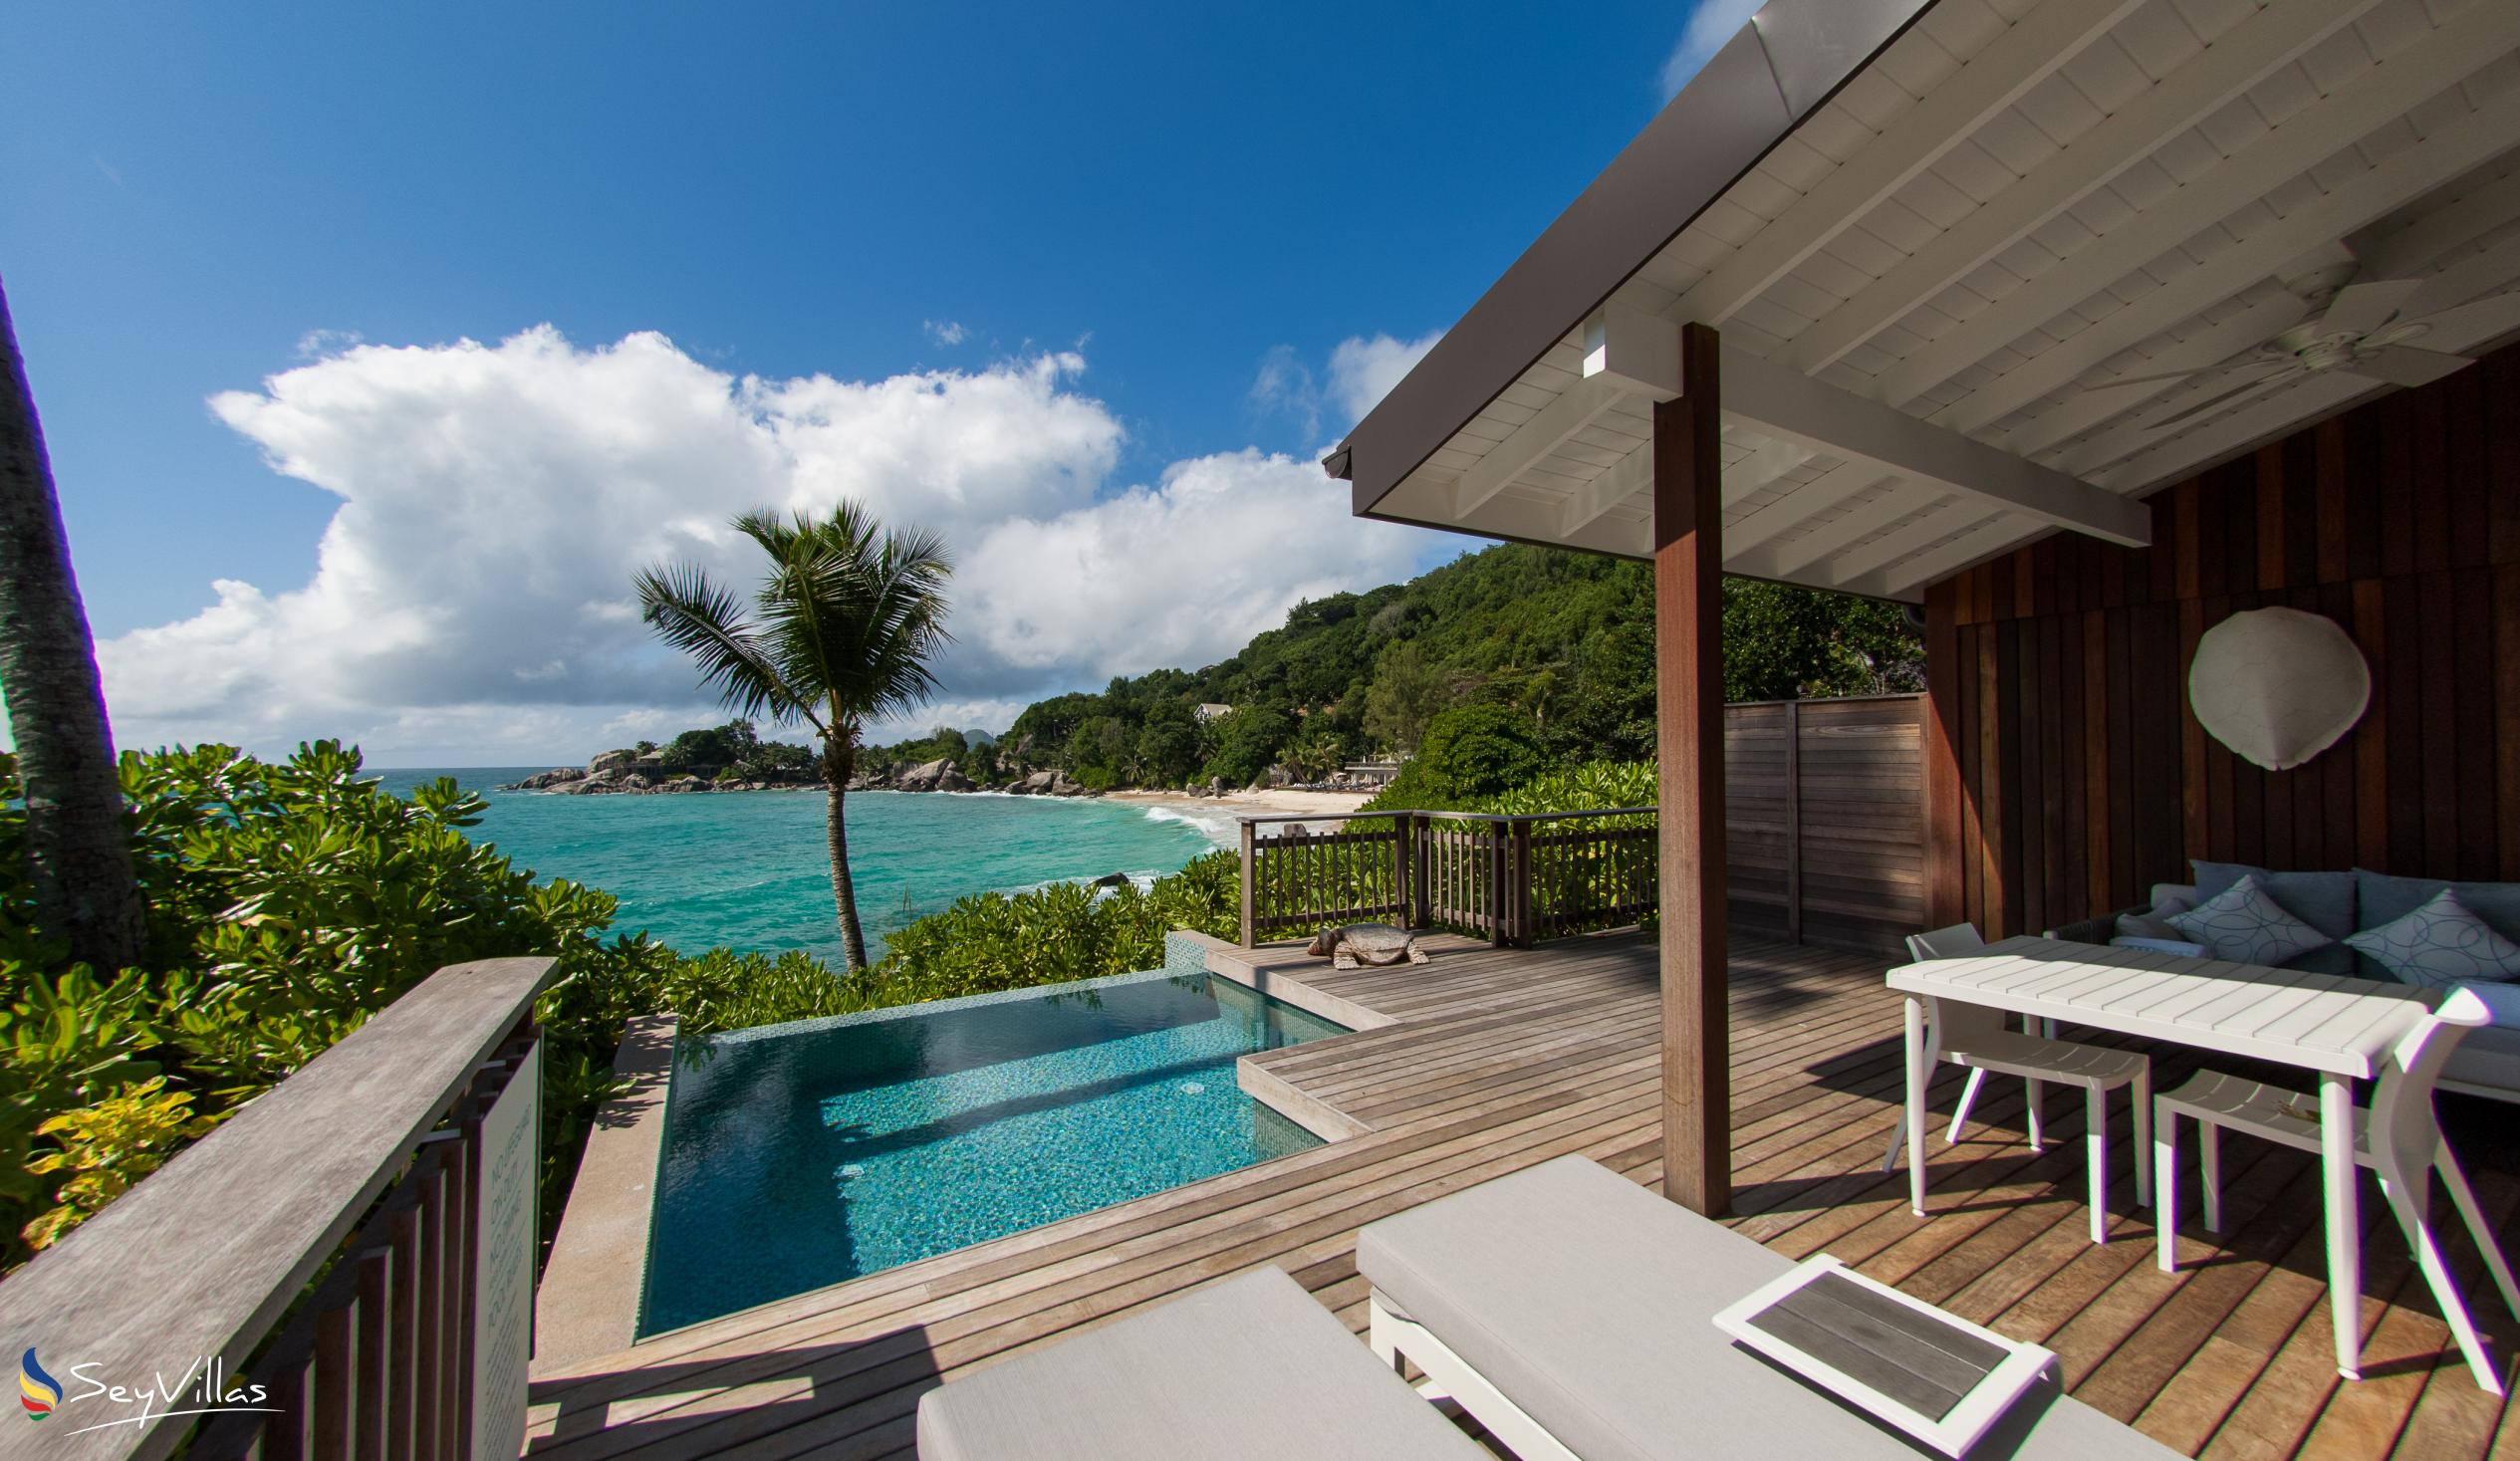 Foto 11: Carana Beach Hotel - Chalet-Vue sur l’océan-Piscine - Mahé (Seychelles)